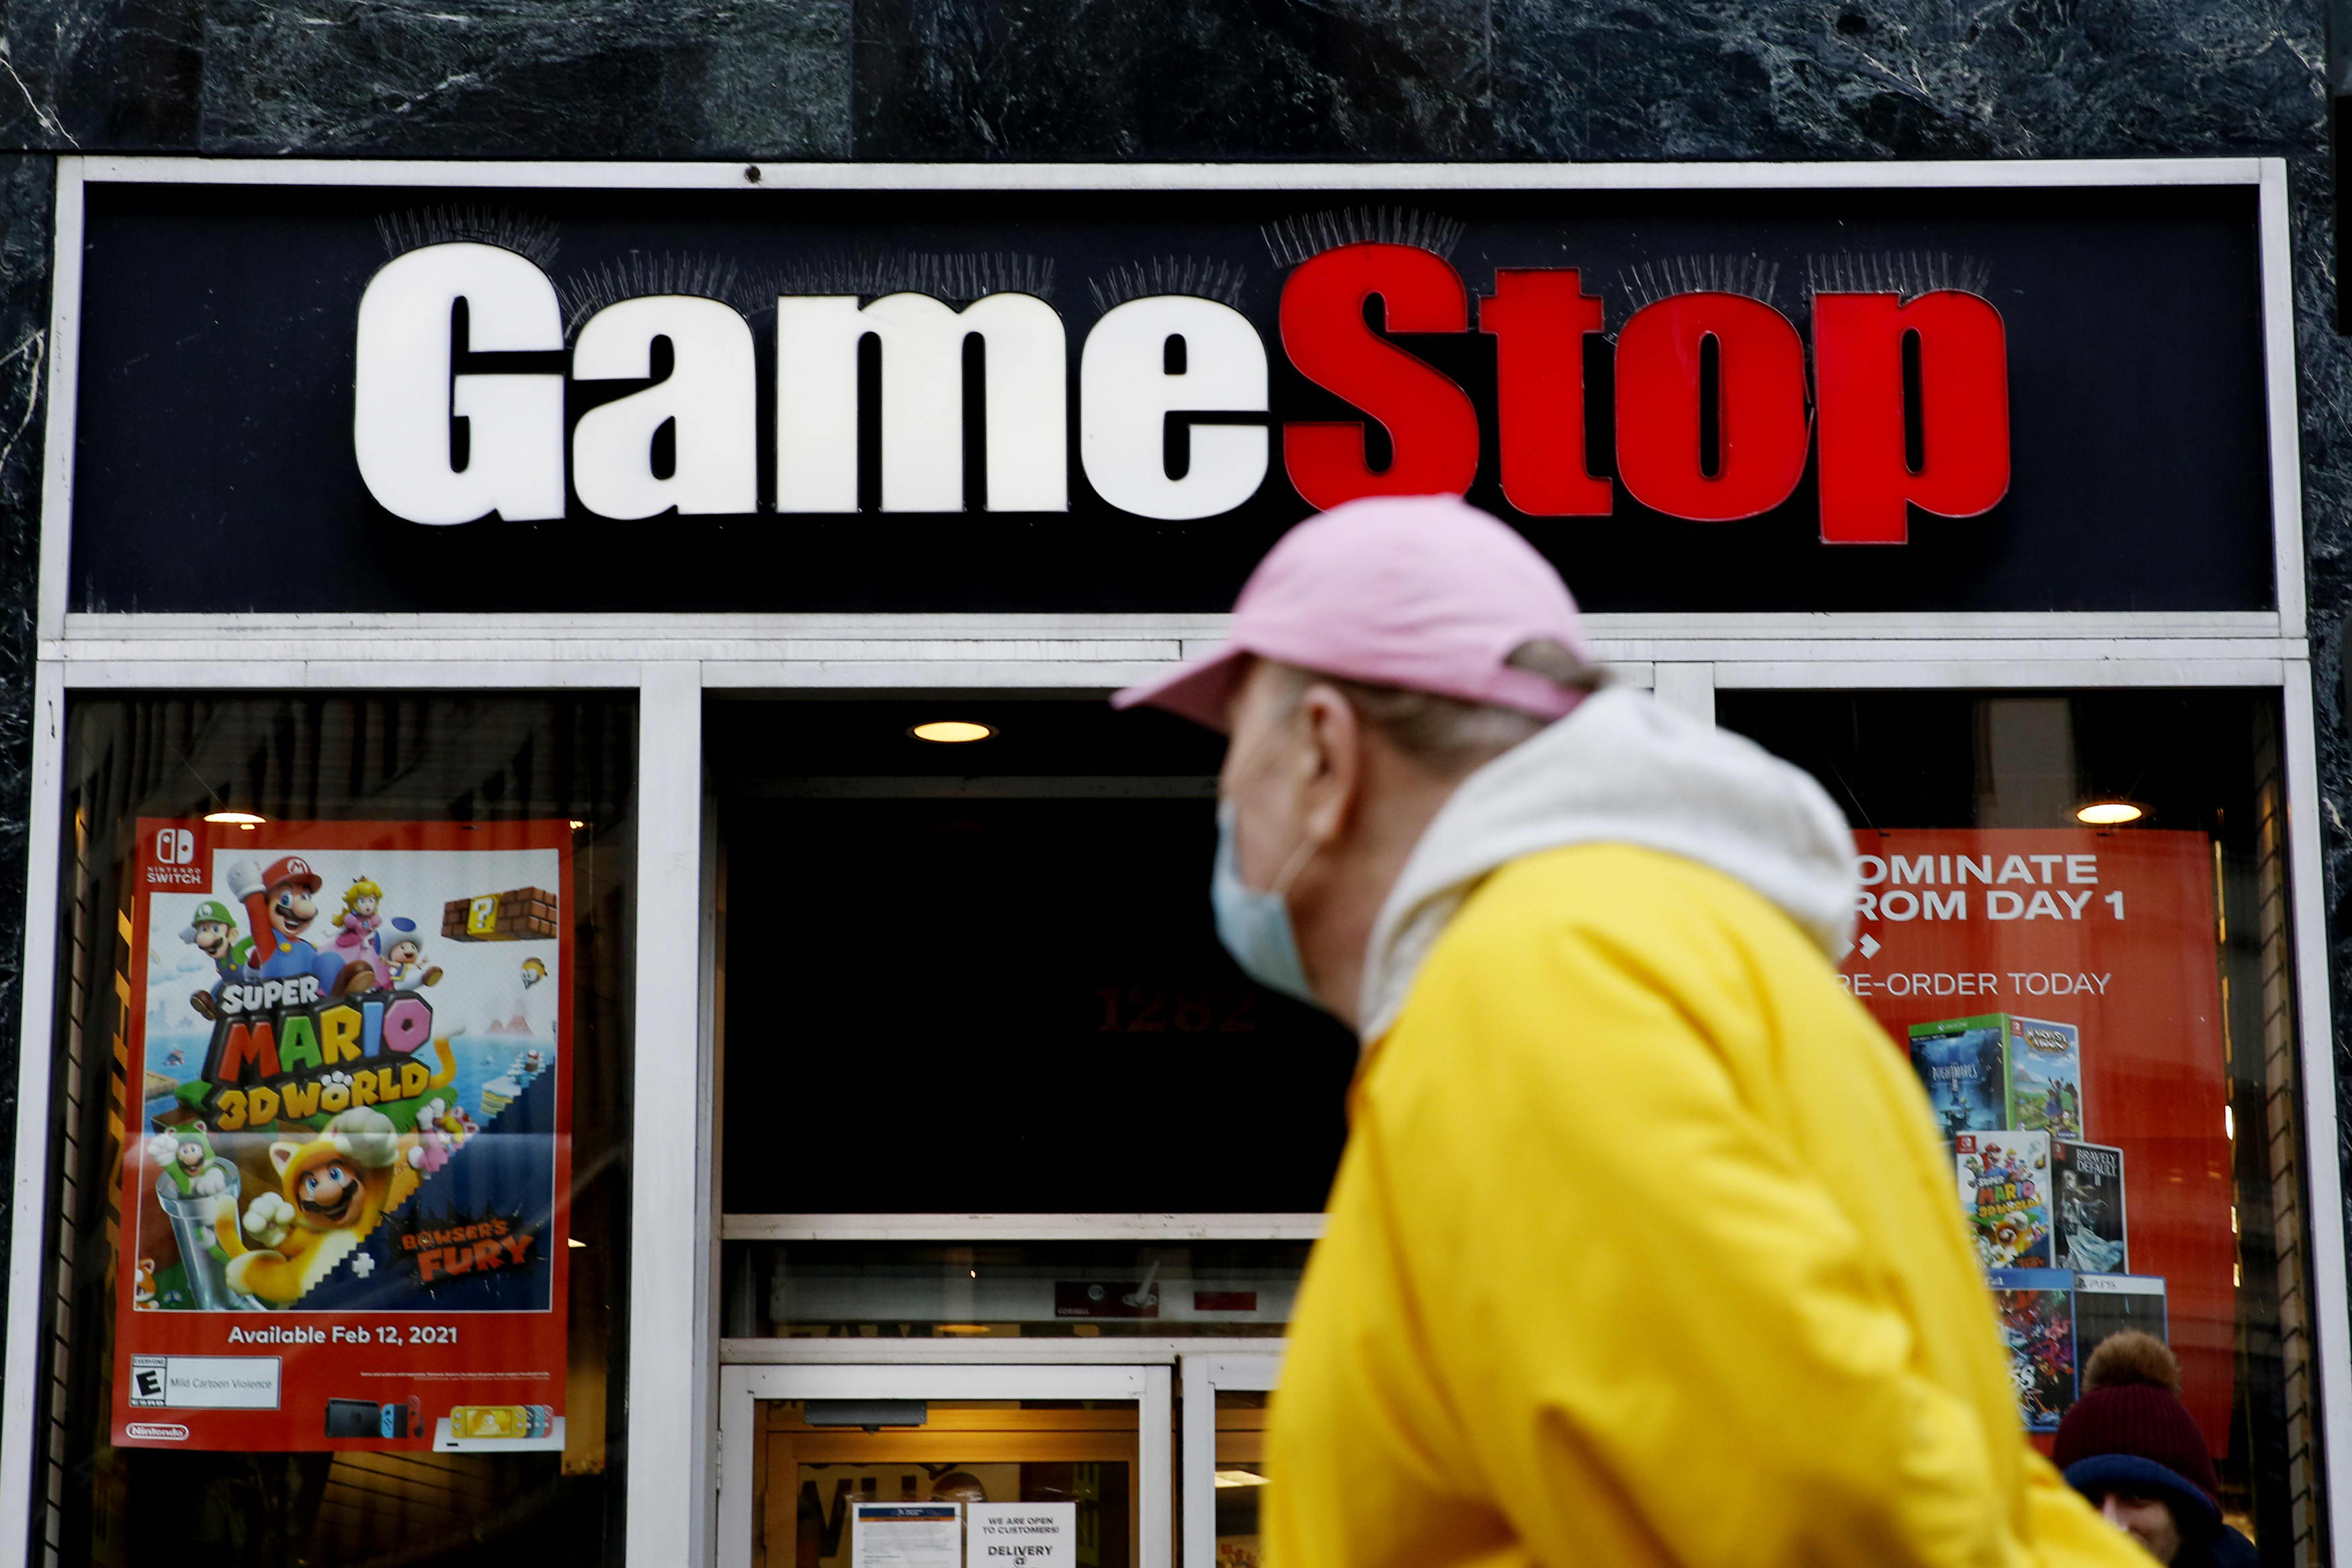 GameStop eliminates declining earnings, rises 50% to make recent slide